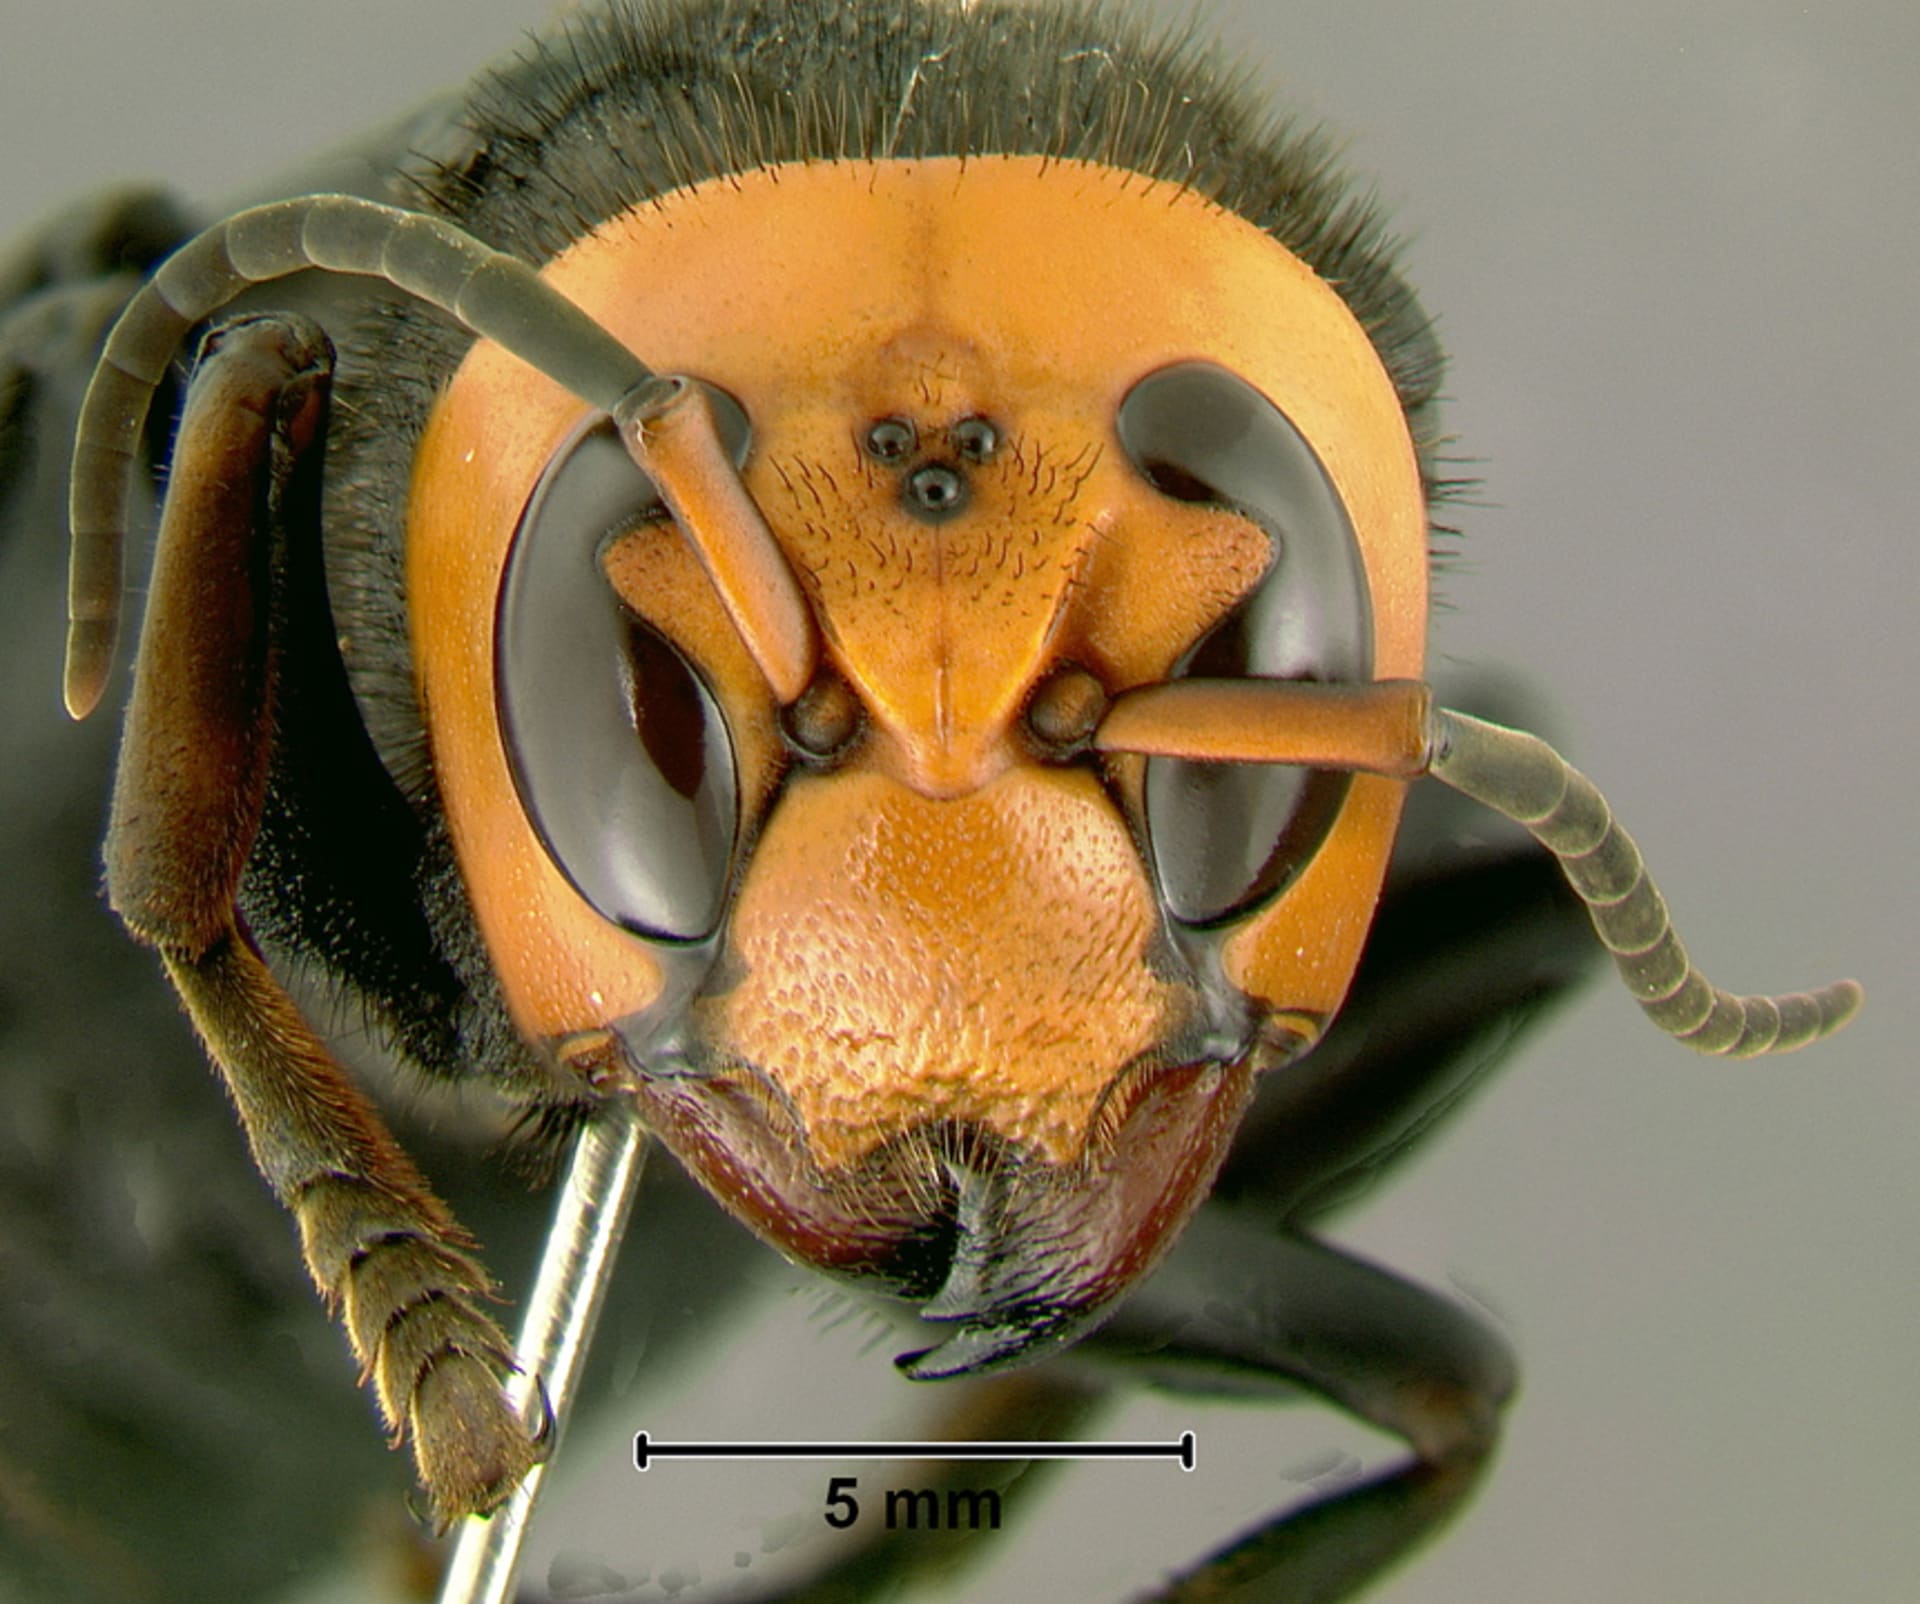 Sršeň mandarínská má tak silný chitinový krunýř, že jím žihadla včel medonosných neprojdou. Zdroj:  Gary Alpert at en.wikipedia